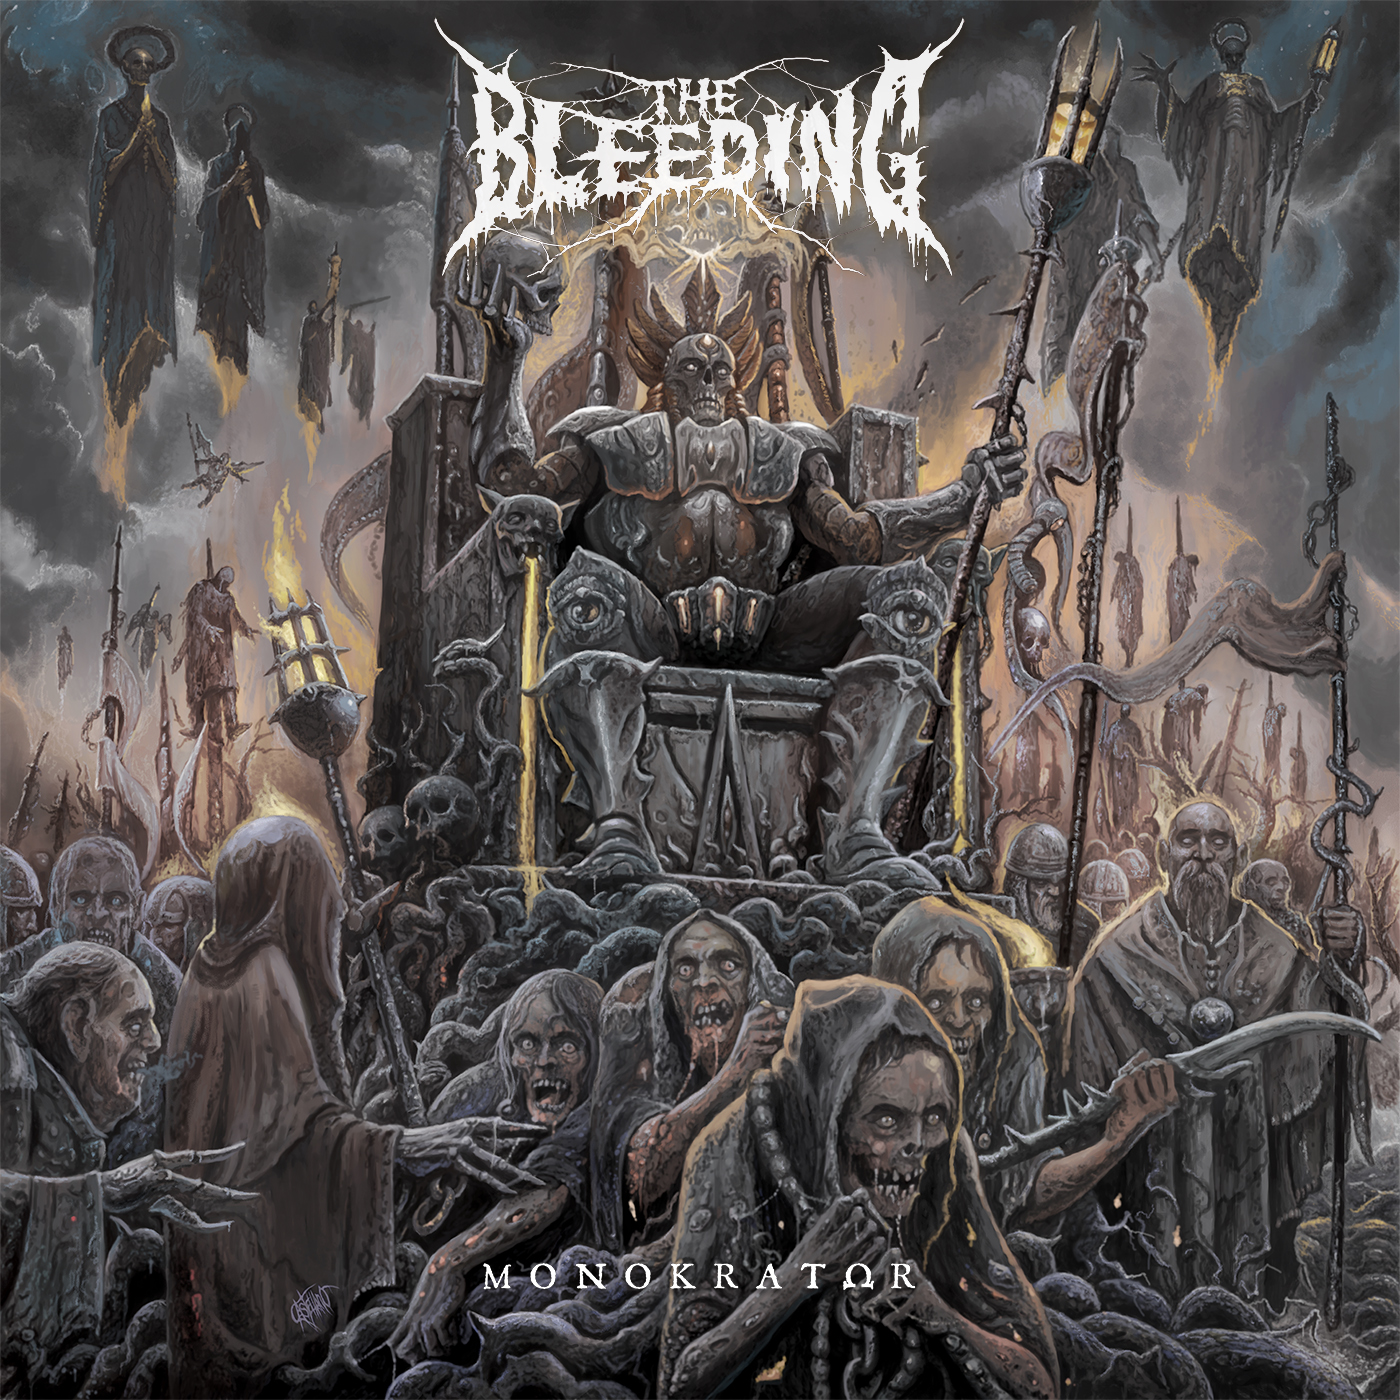 ALBUM REVIEW: Monokrator by The Bleeding